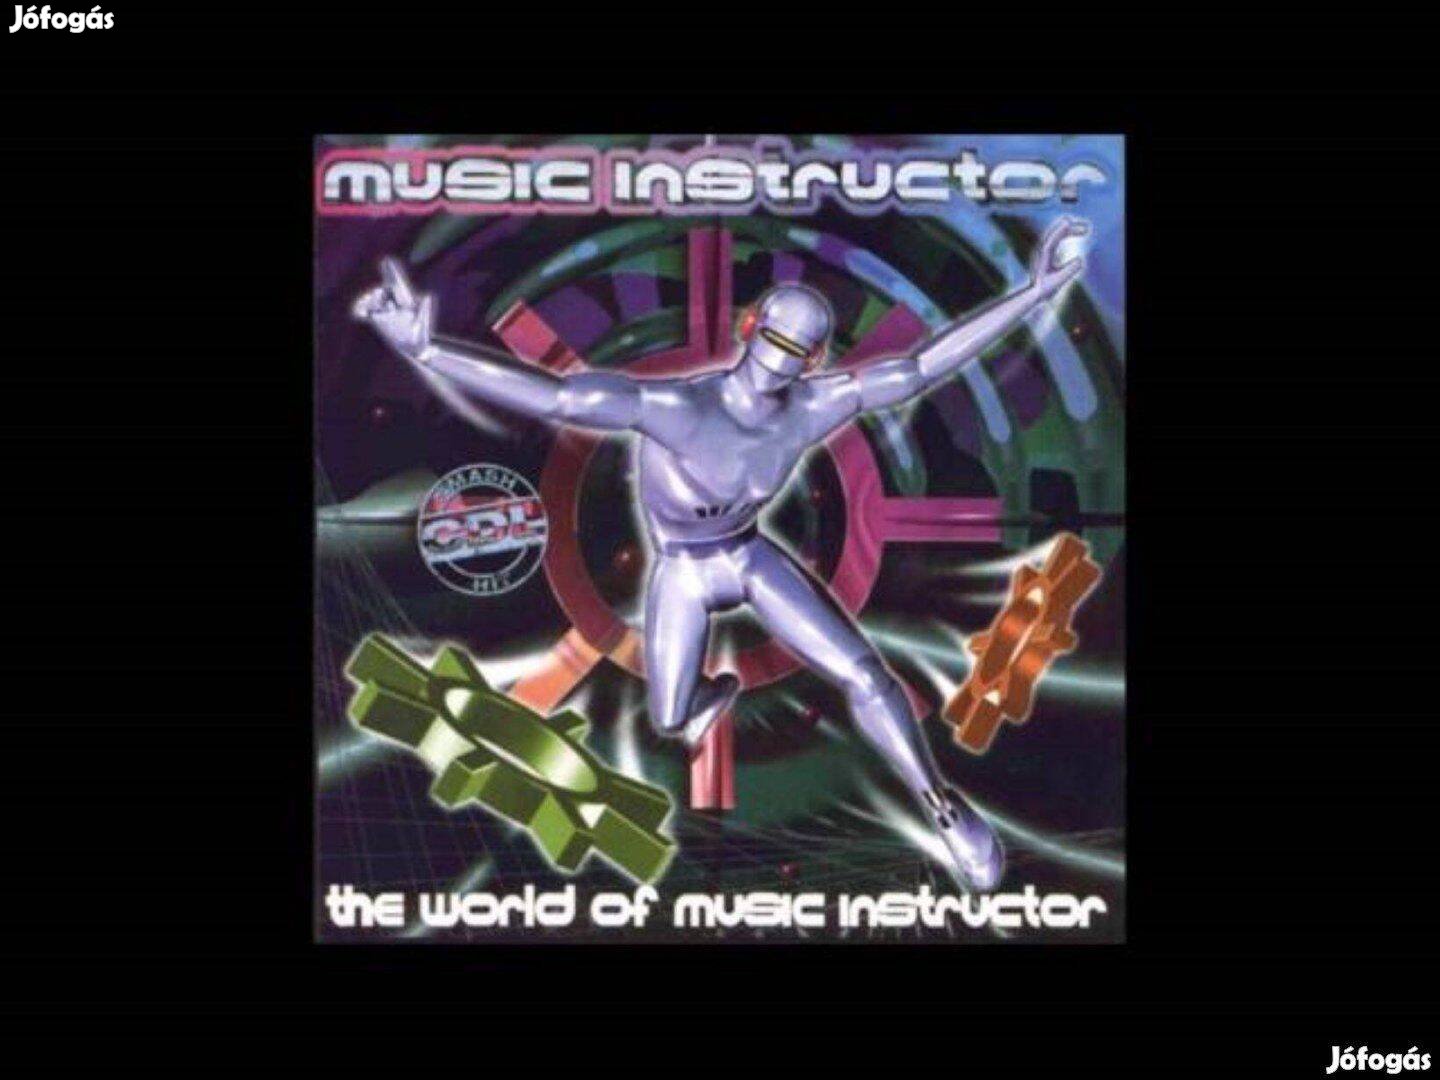 Music instruktor- the world of